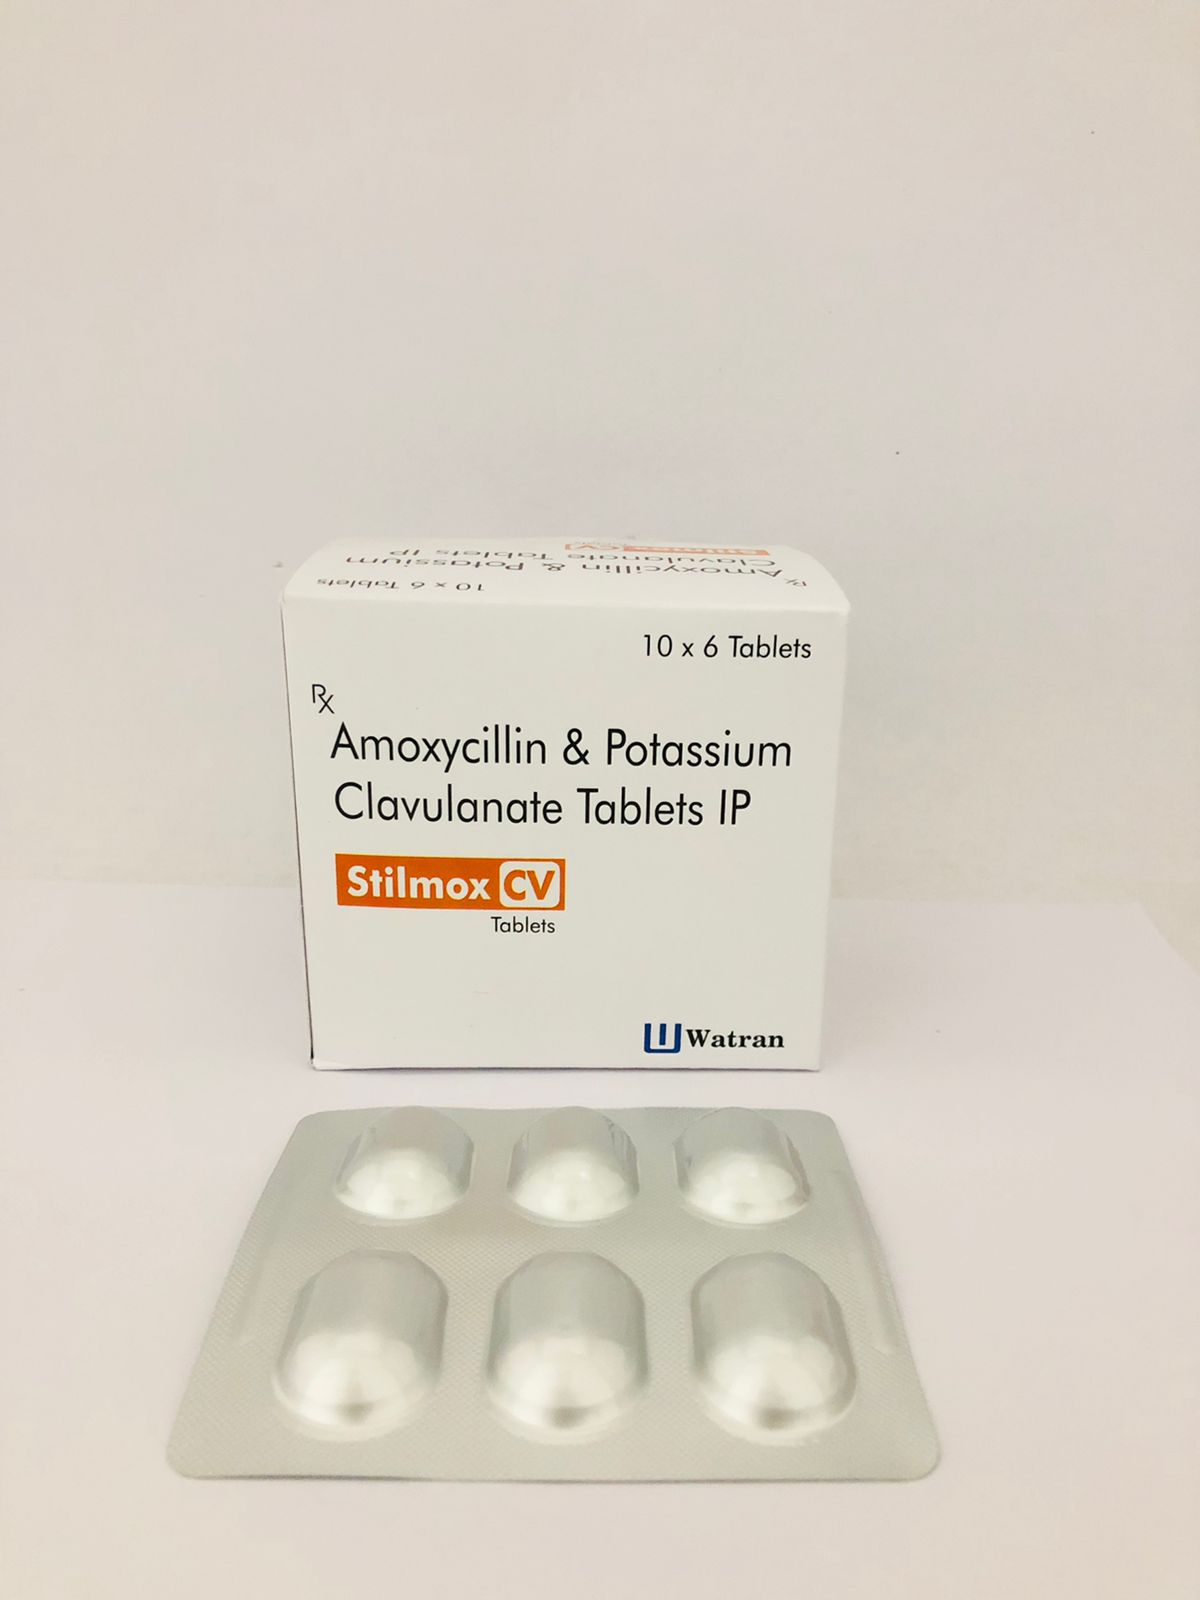 Amoxycillin 500 mg + Clavulanic Acid 125 mg